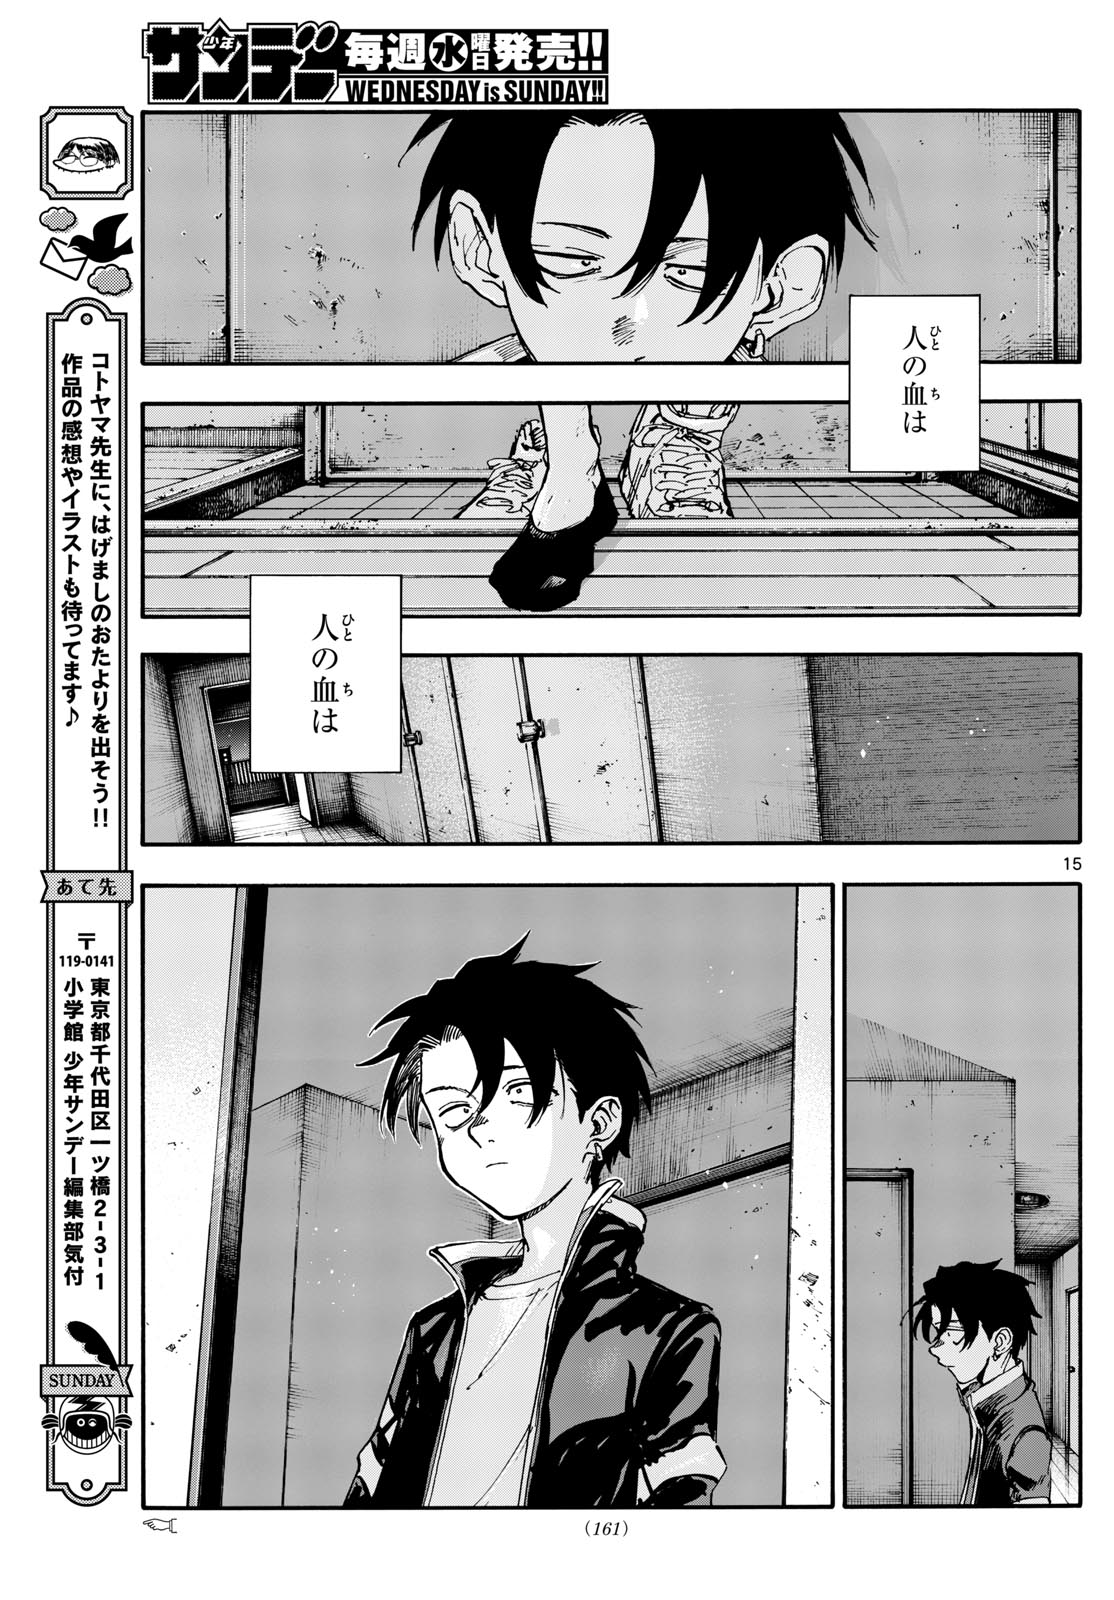 Yofukashi no Uta - Chapter 194 - Page 15